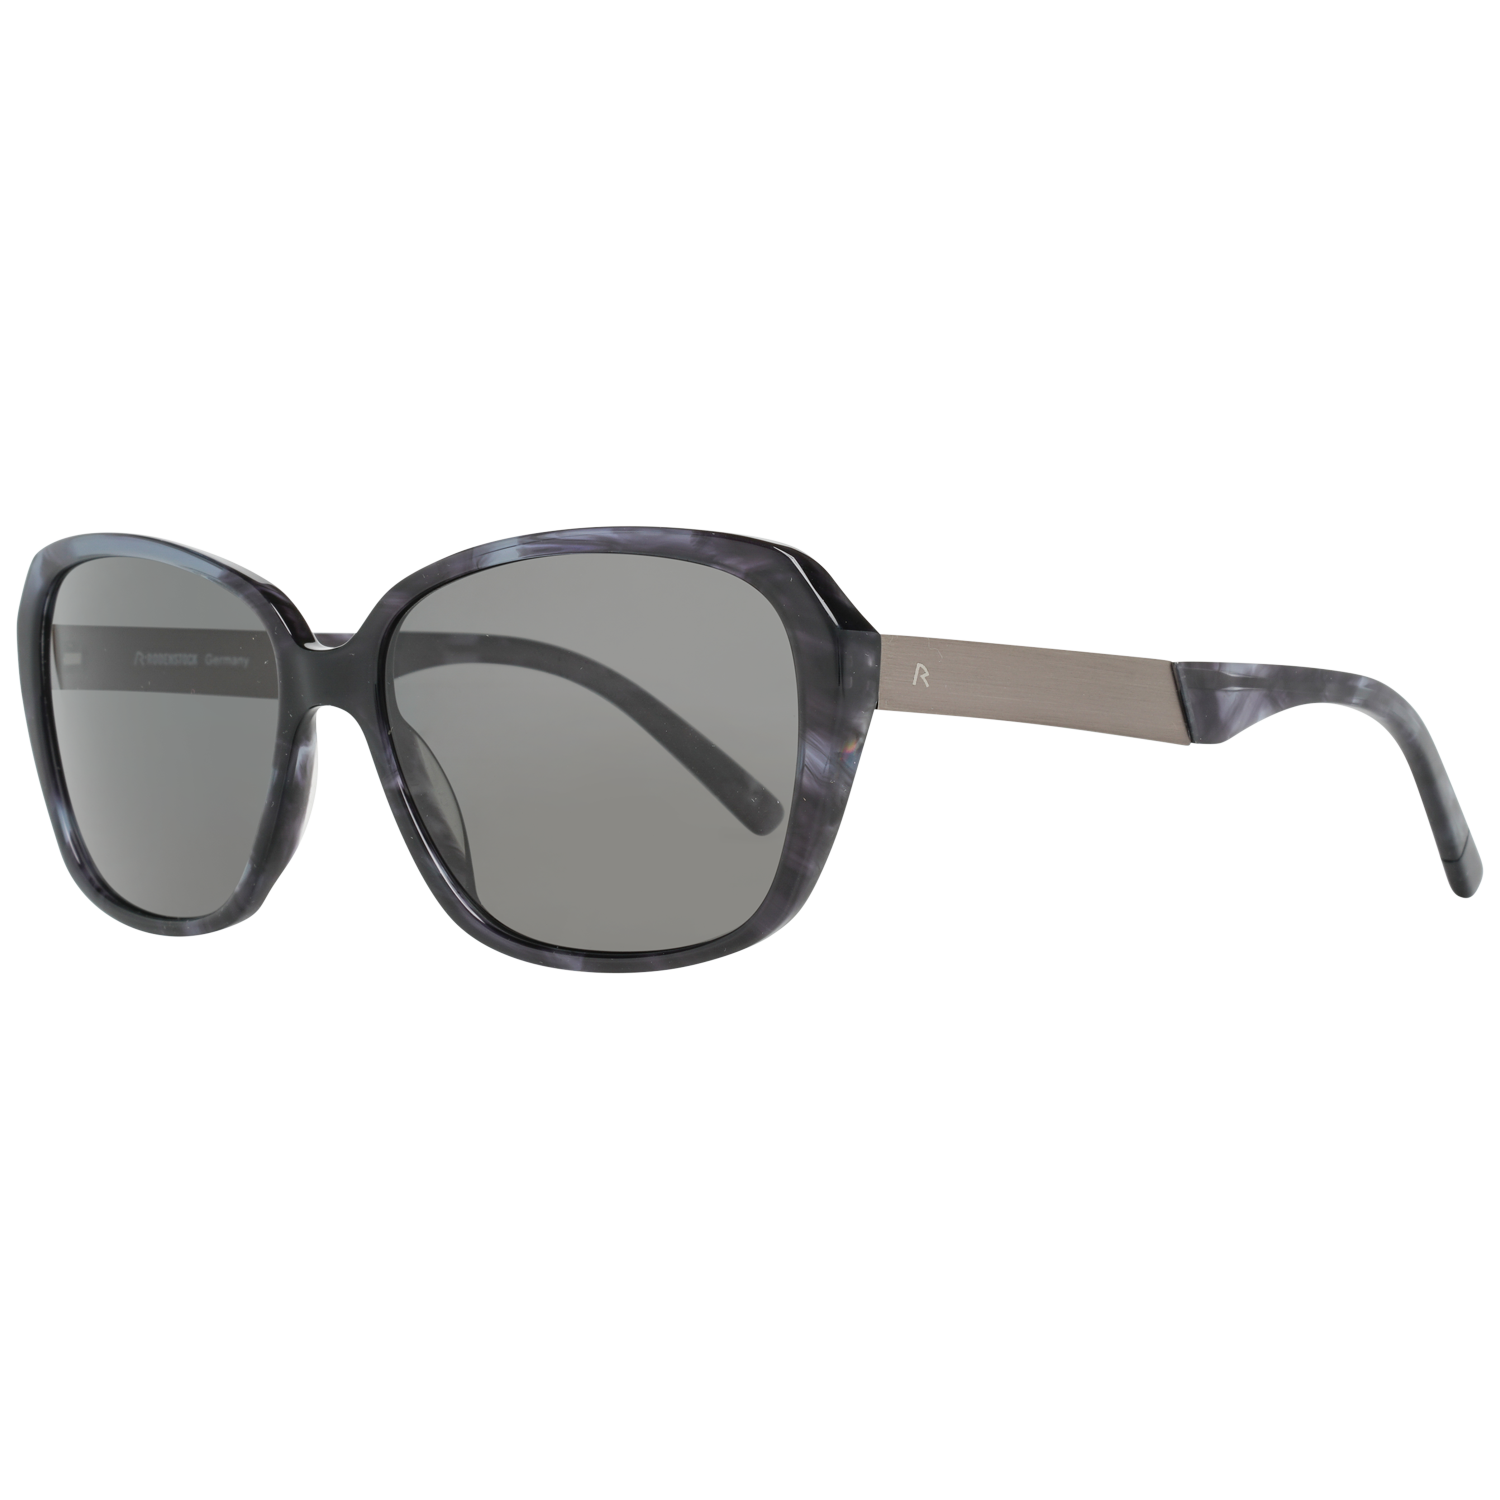 Rodenstock Sunglasses R3299 A 57 Grey